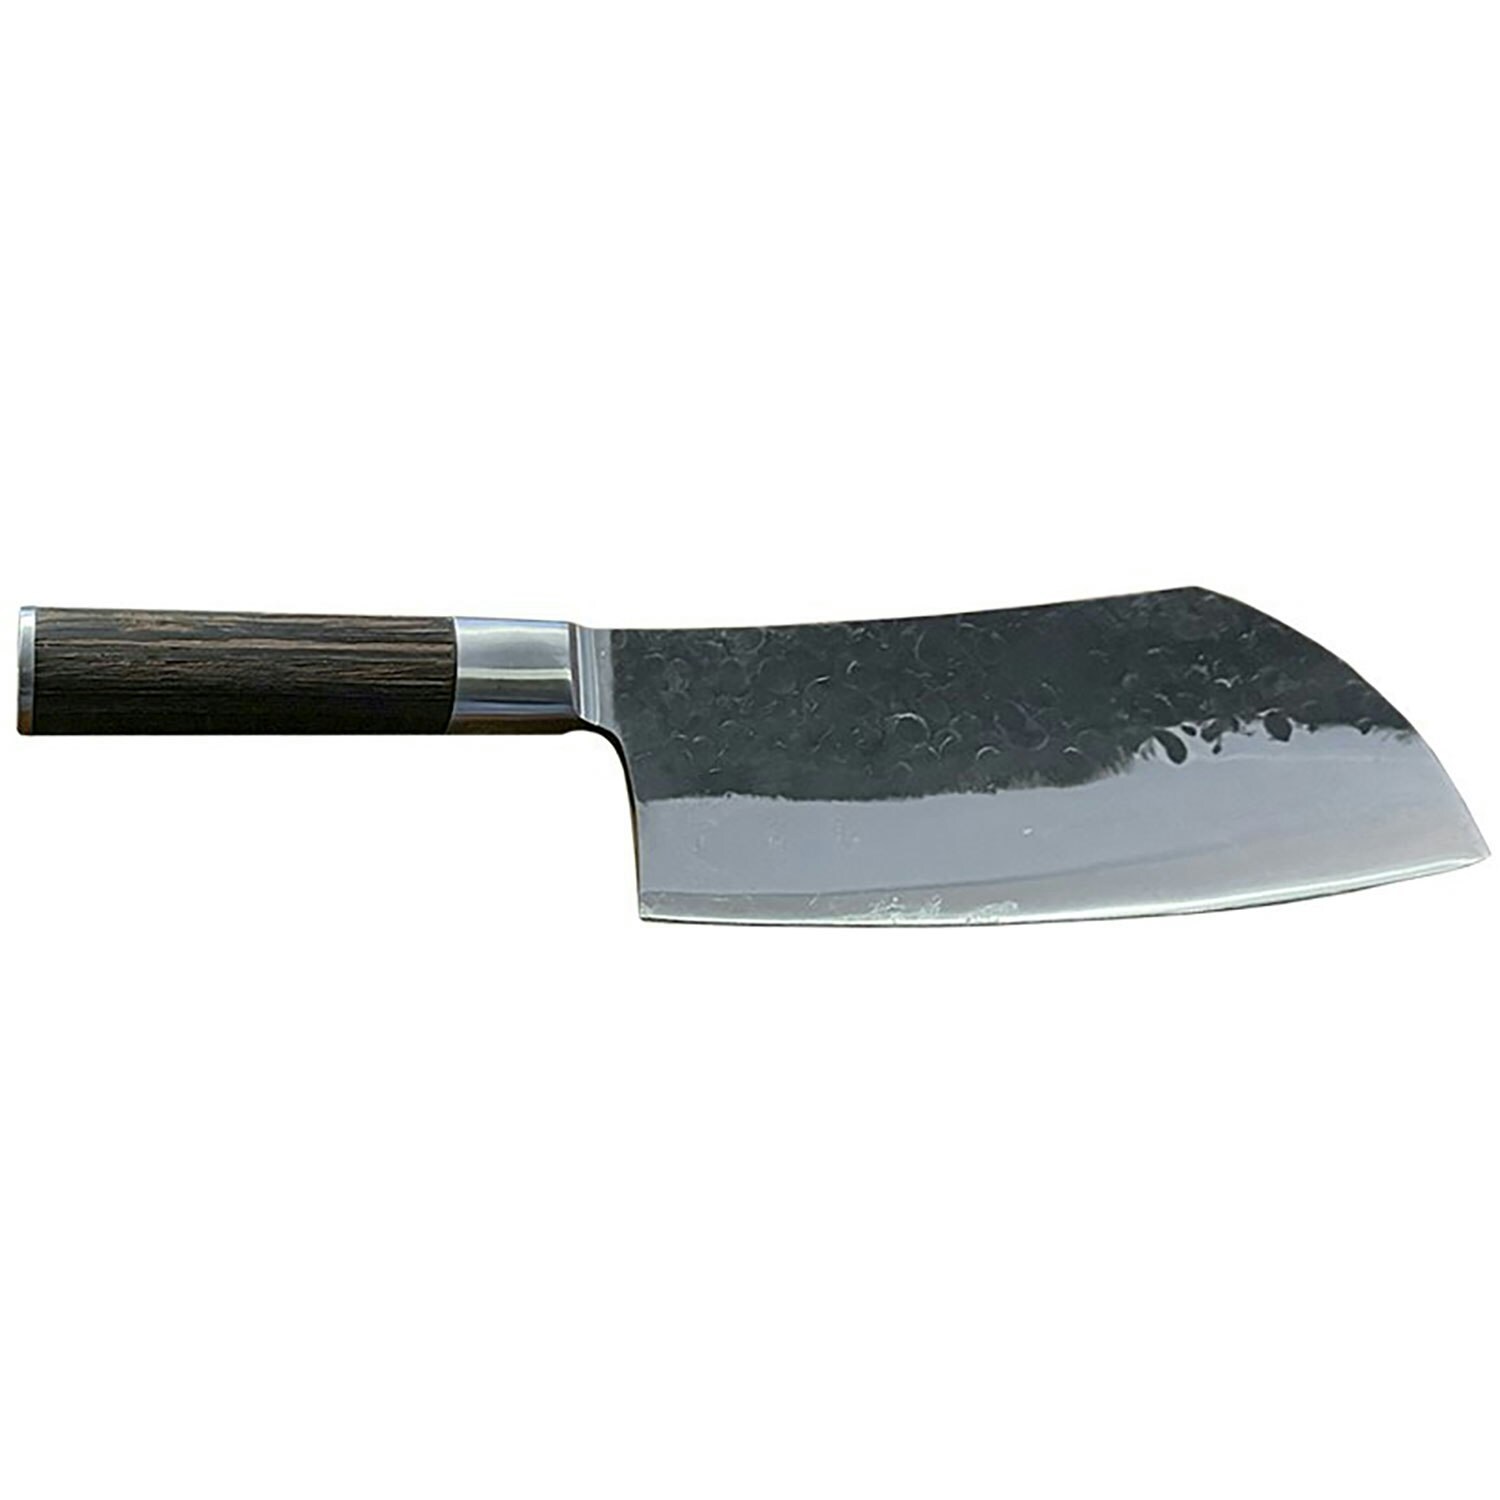 Albera Utility Knife 13 cm - Heirol @ RoyalDesign